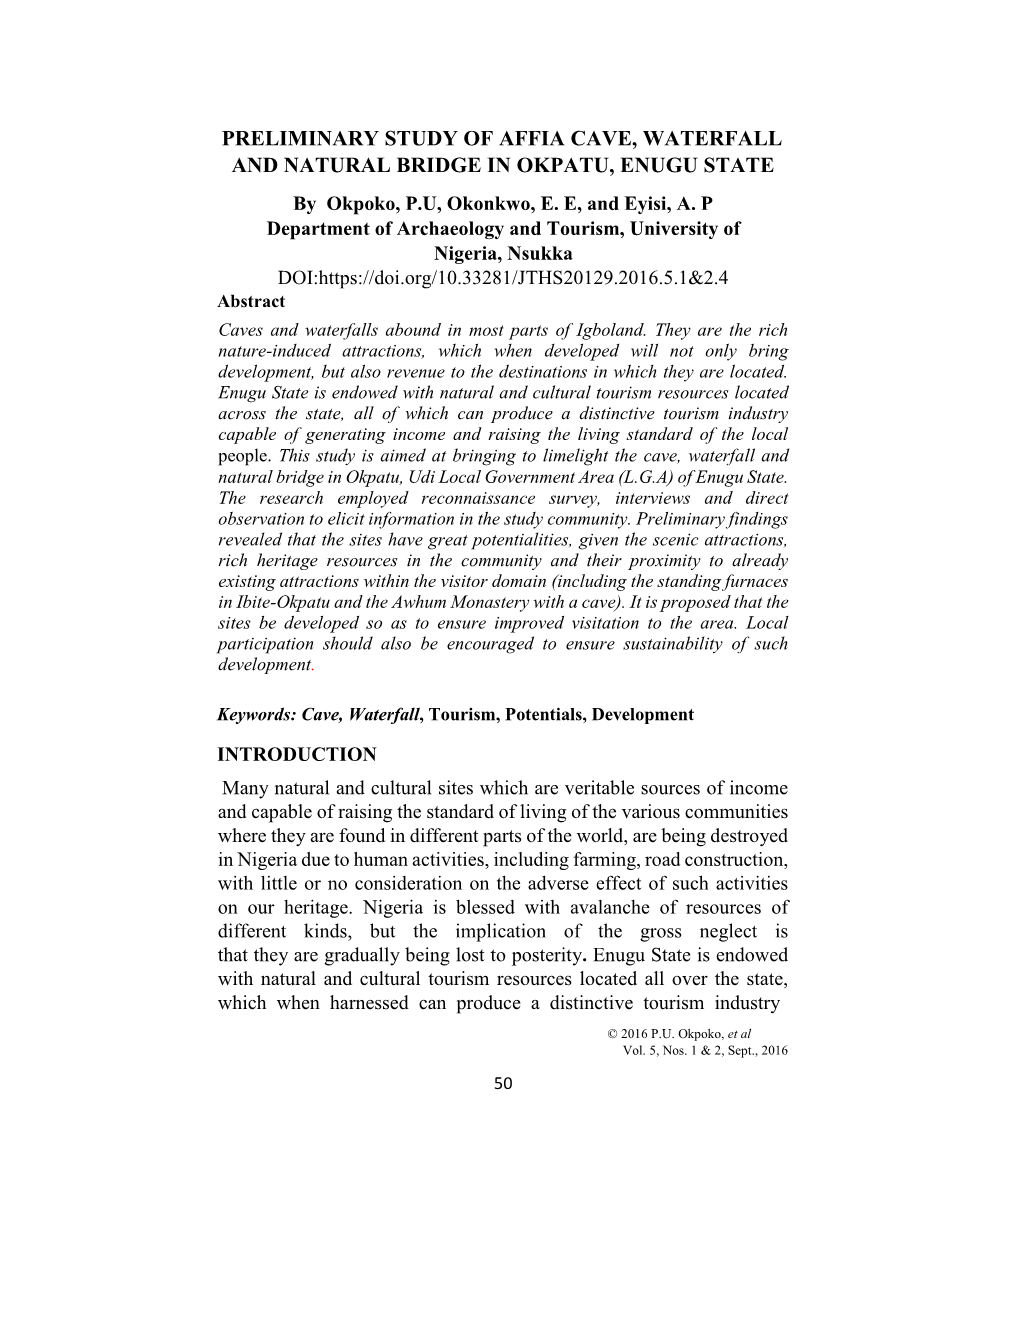 PRELIMINARY STUDY of AFFIA CAVE, WATERFALL and NATURAL BRIDGE in OKPATU, ENUGU STATE by Okpoko, P.U, Okonkwo, E